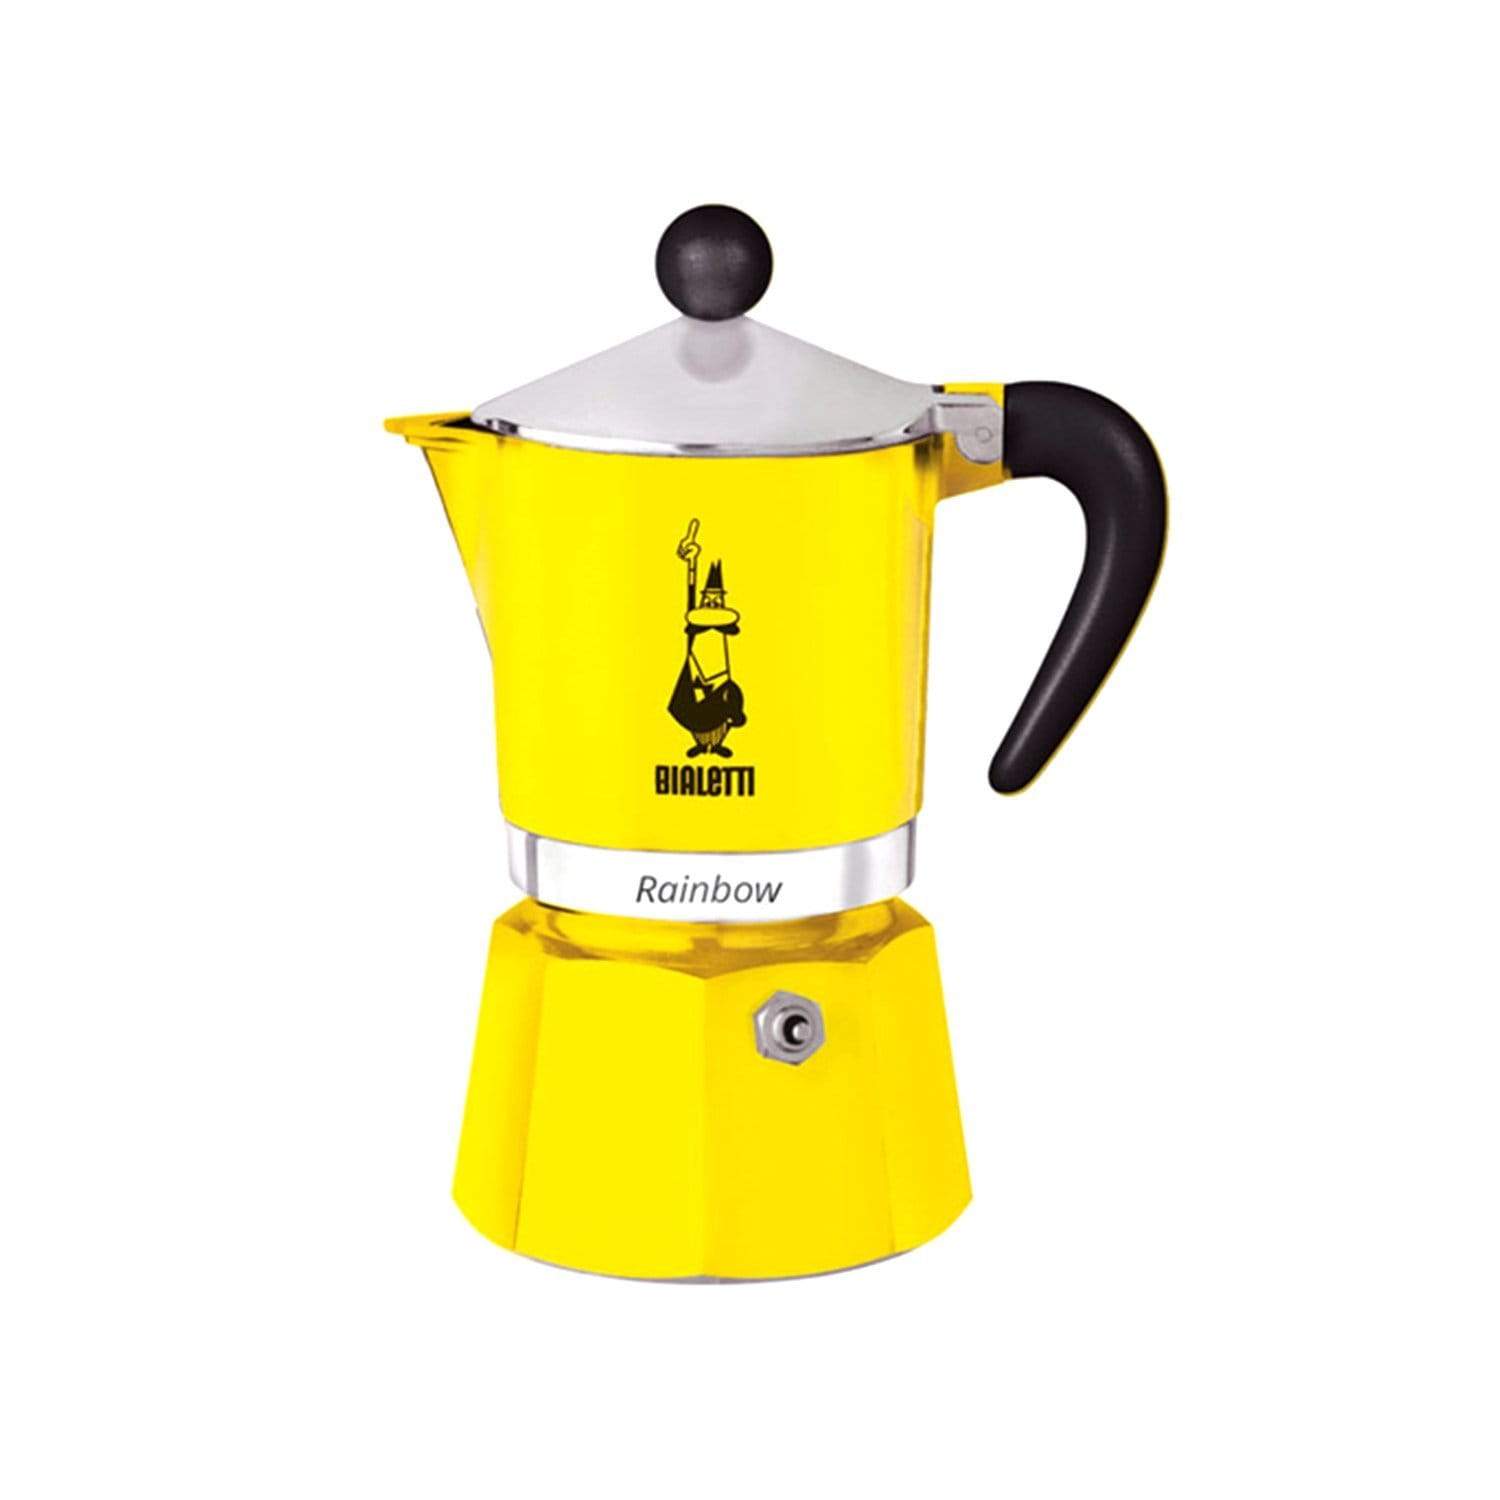 Bialetti Rainbow Coffee Maker - Yellow, 3 Cups - 4982 - Jashanmal Home